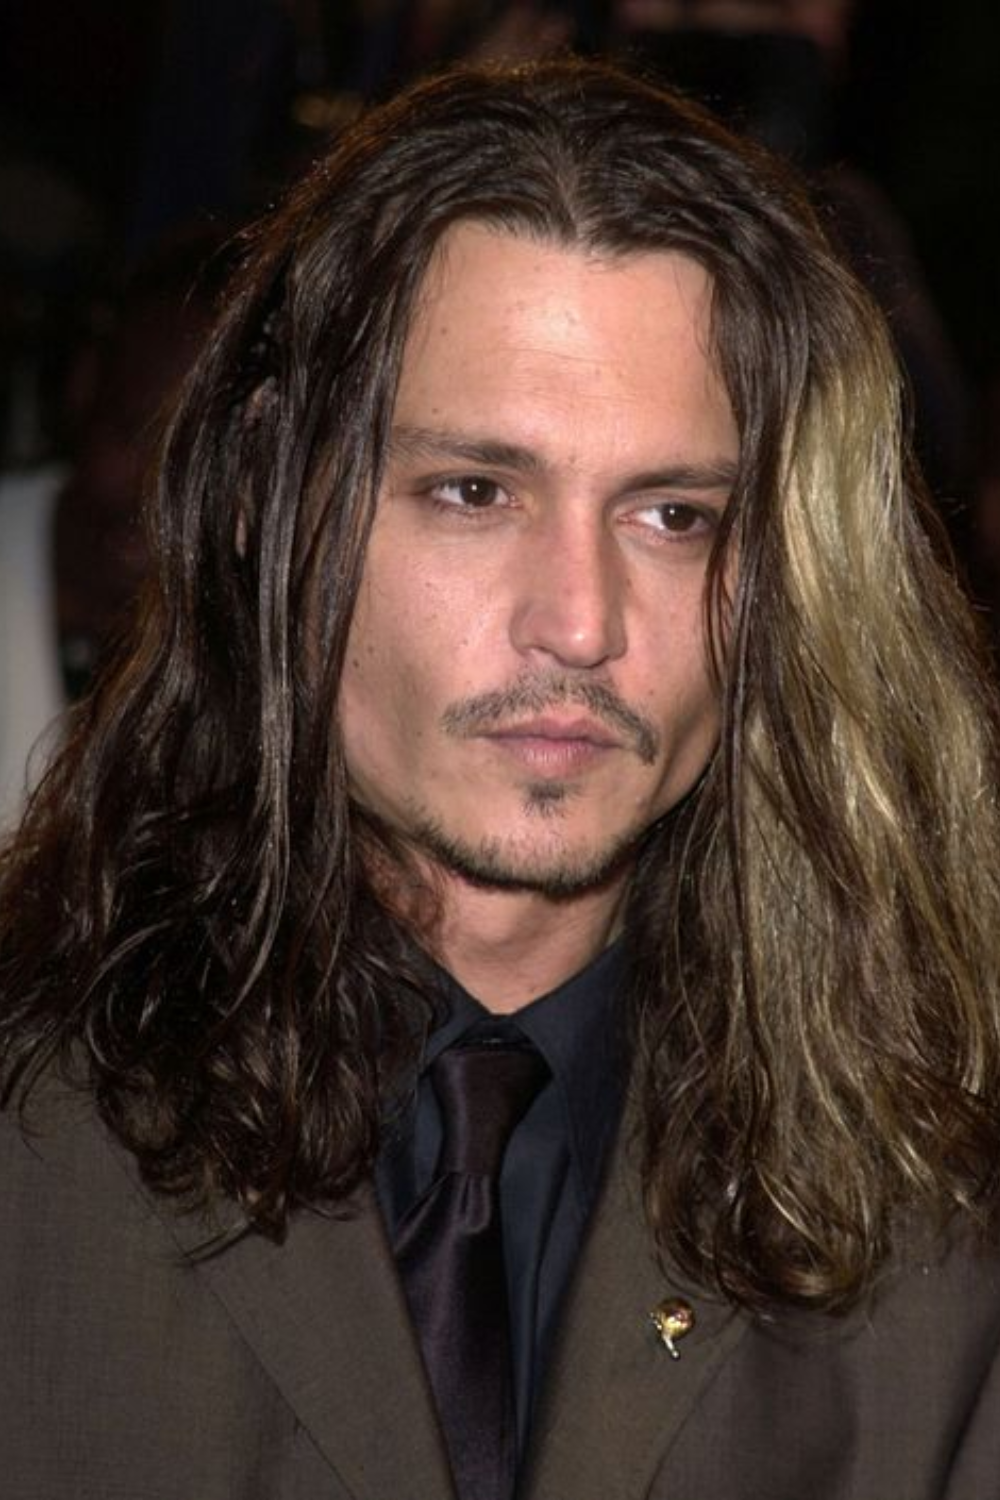 Johnny Depp Hair